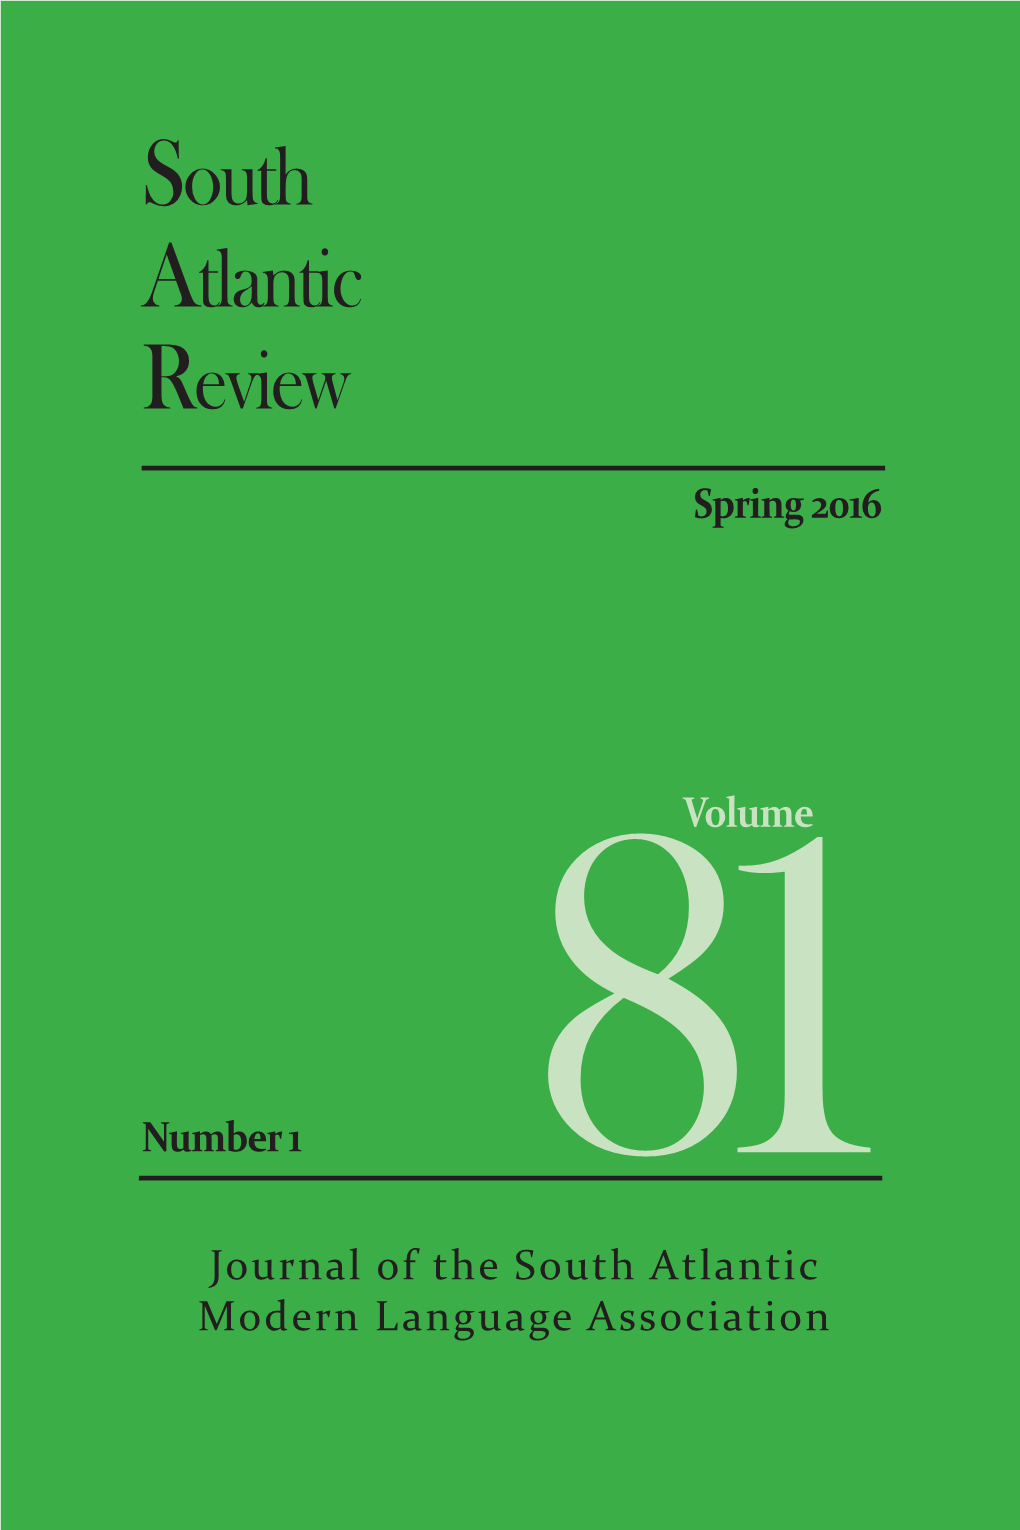 South Atlantic Review